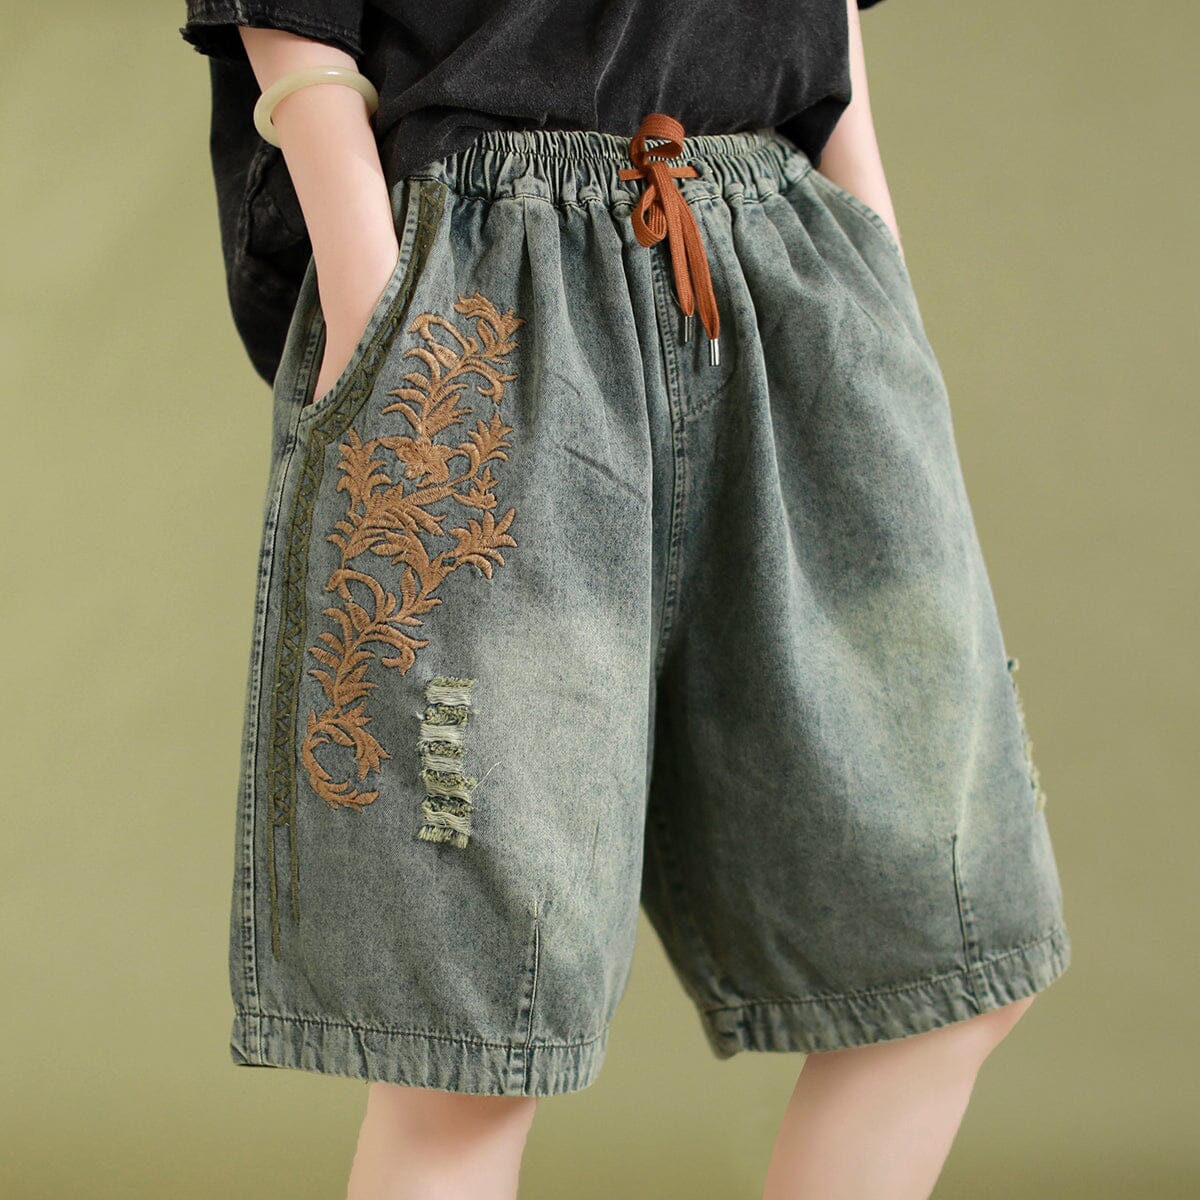 Women Summer Loose Retro Embroidery Denim Shorts